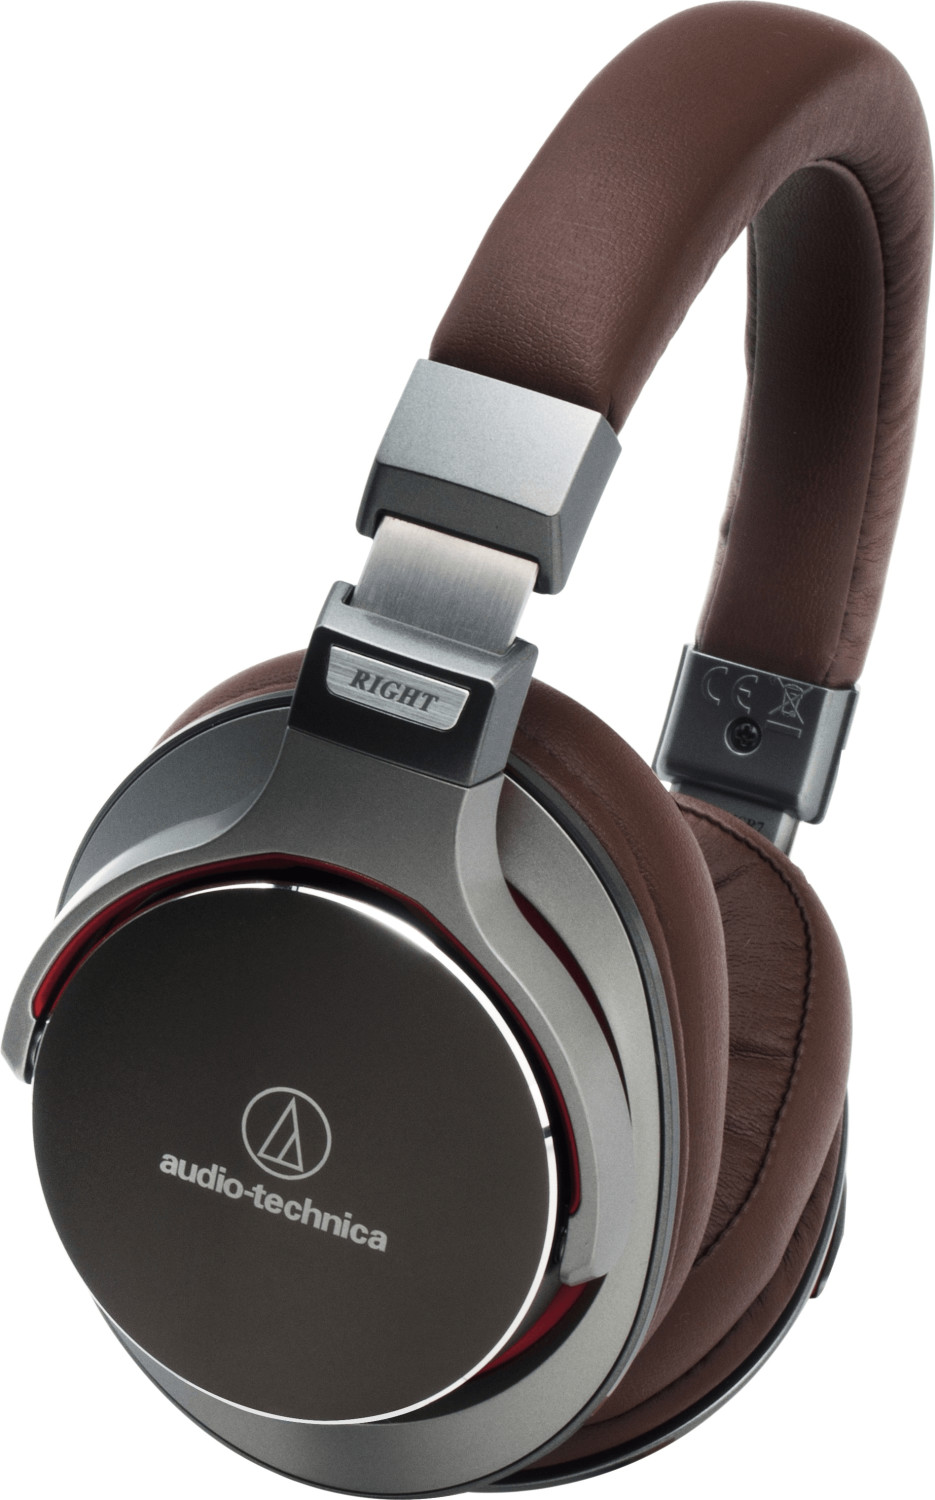 Audio Technica ATH-MSR7 High-Resolution Headphones (Brown)